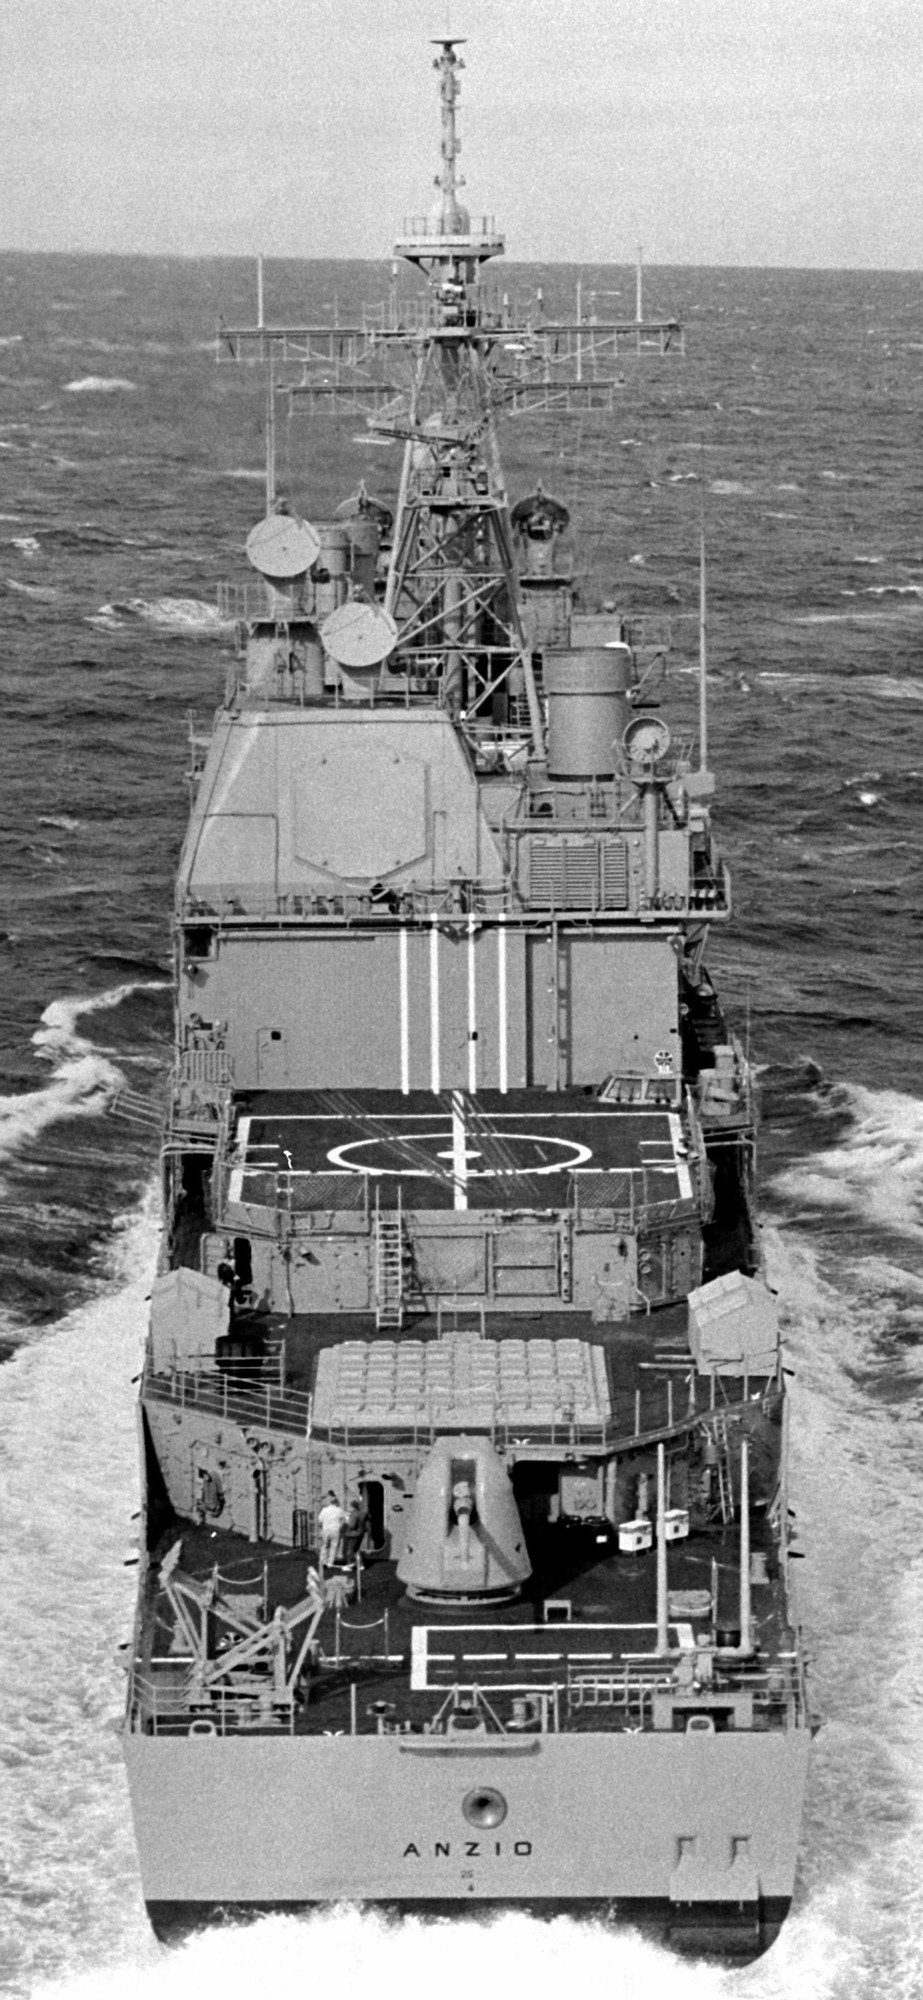 cg-68 uss anzio ticonderoga class guided missile cruiser aegis us navy sea trials 57